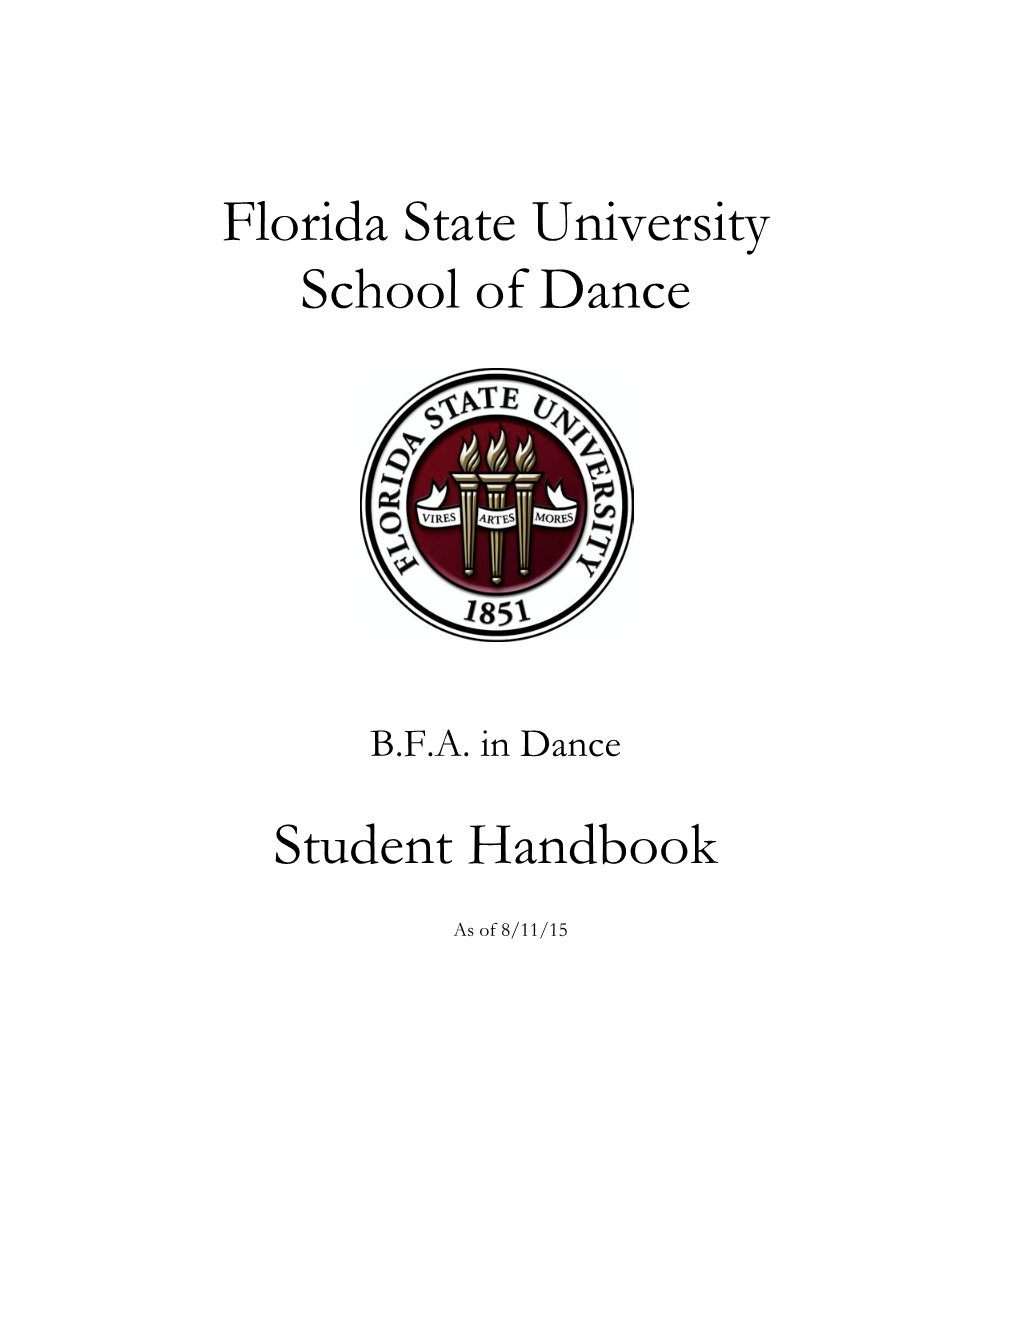 BFA Handbook 15-16